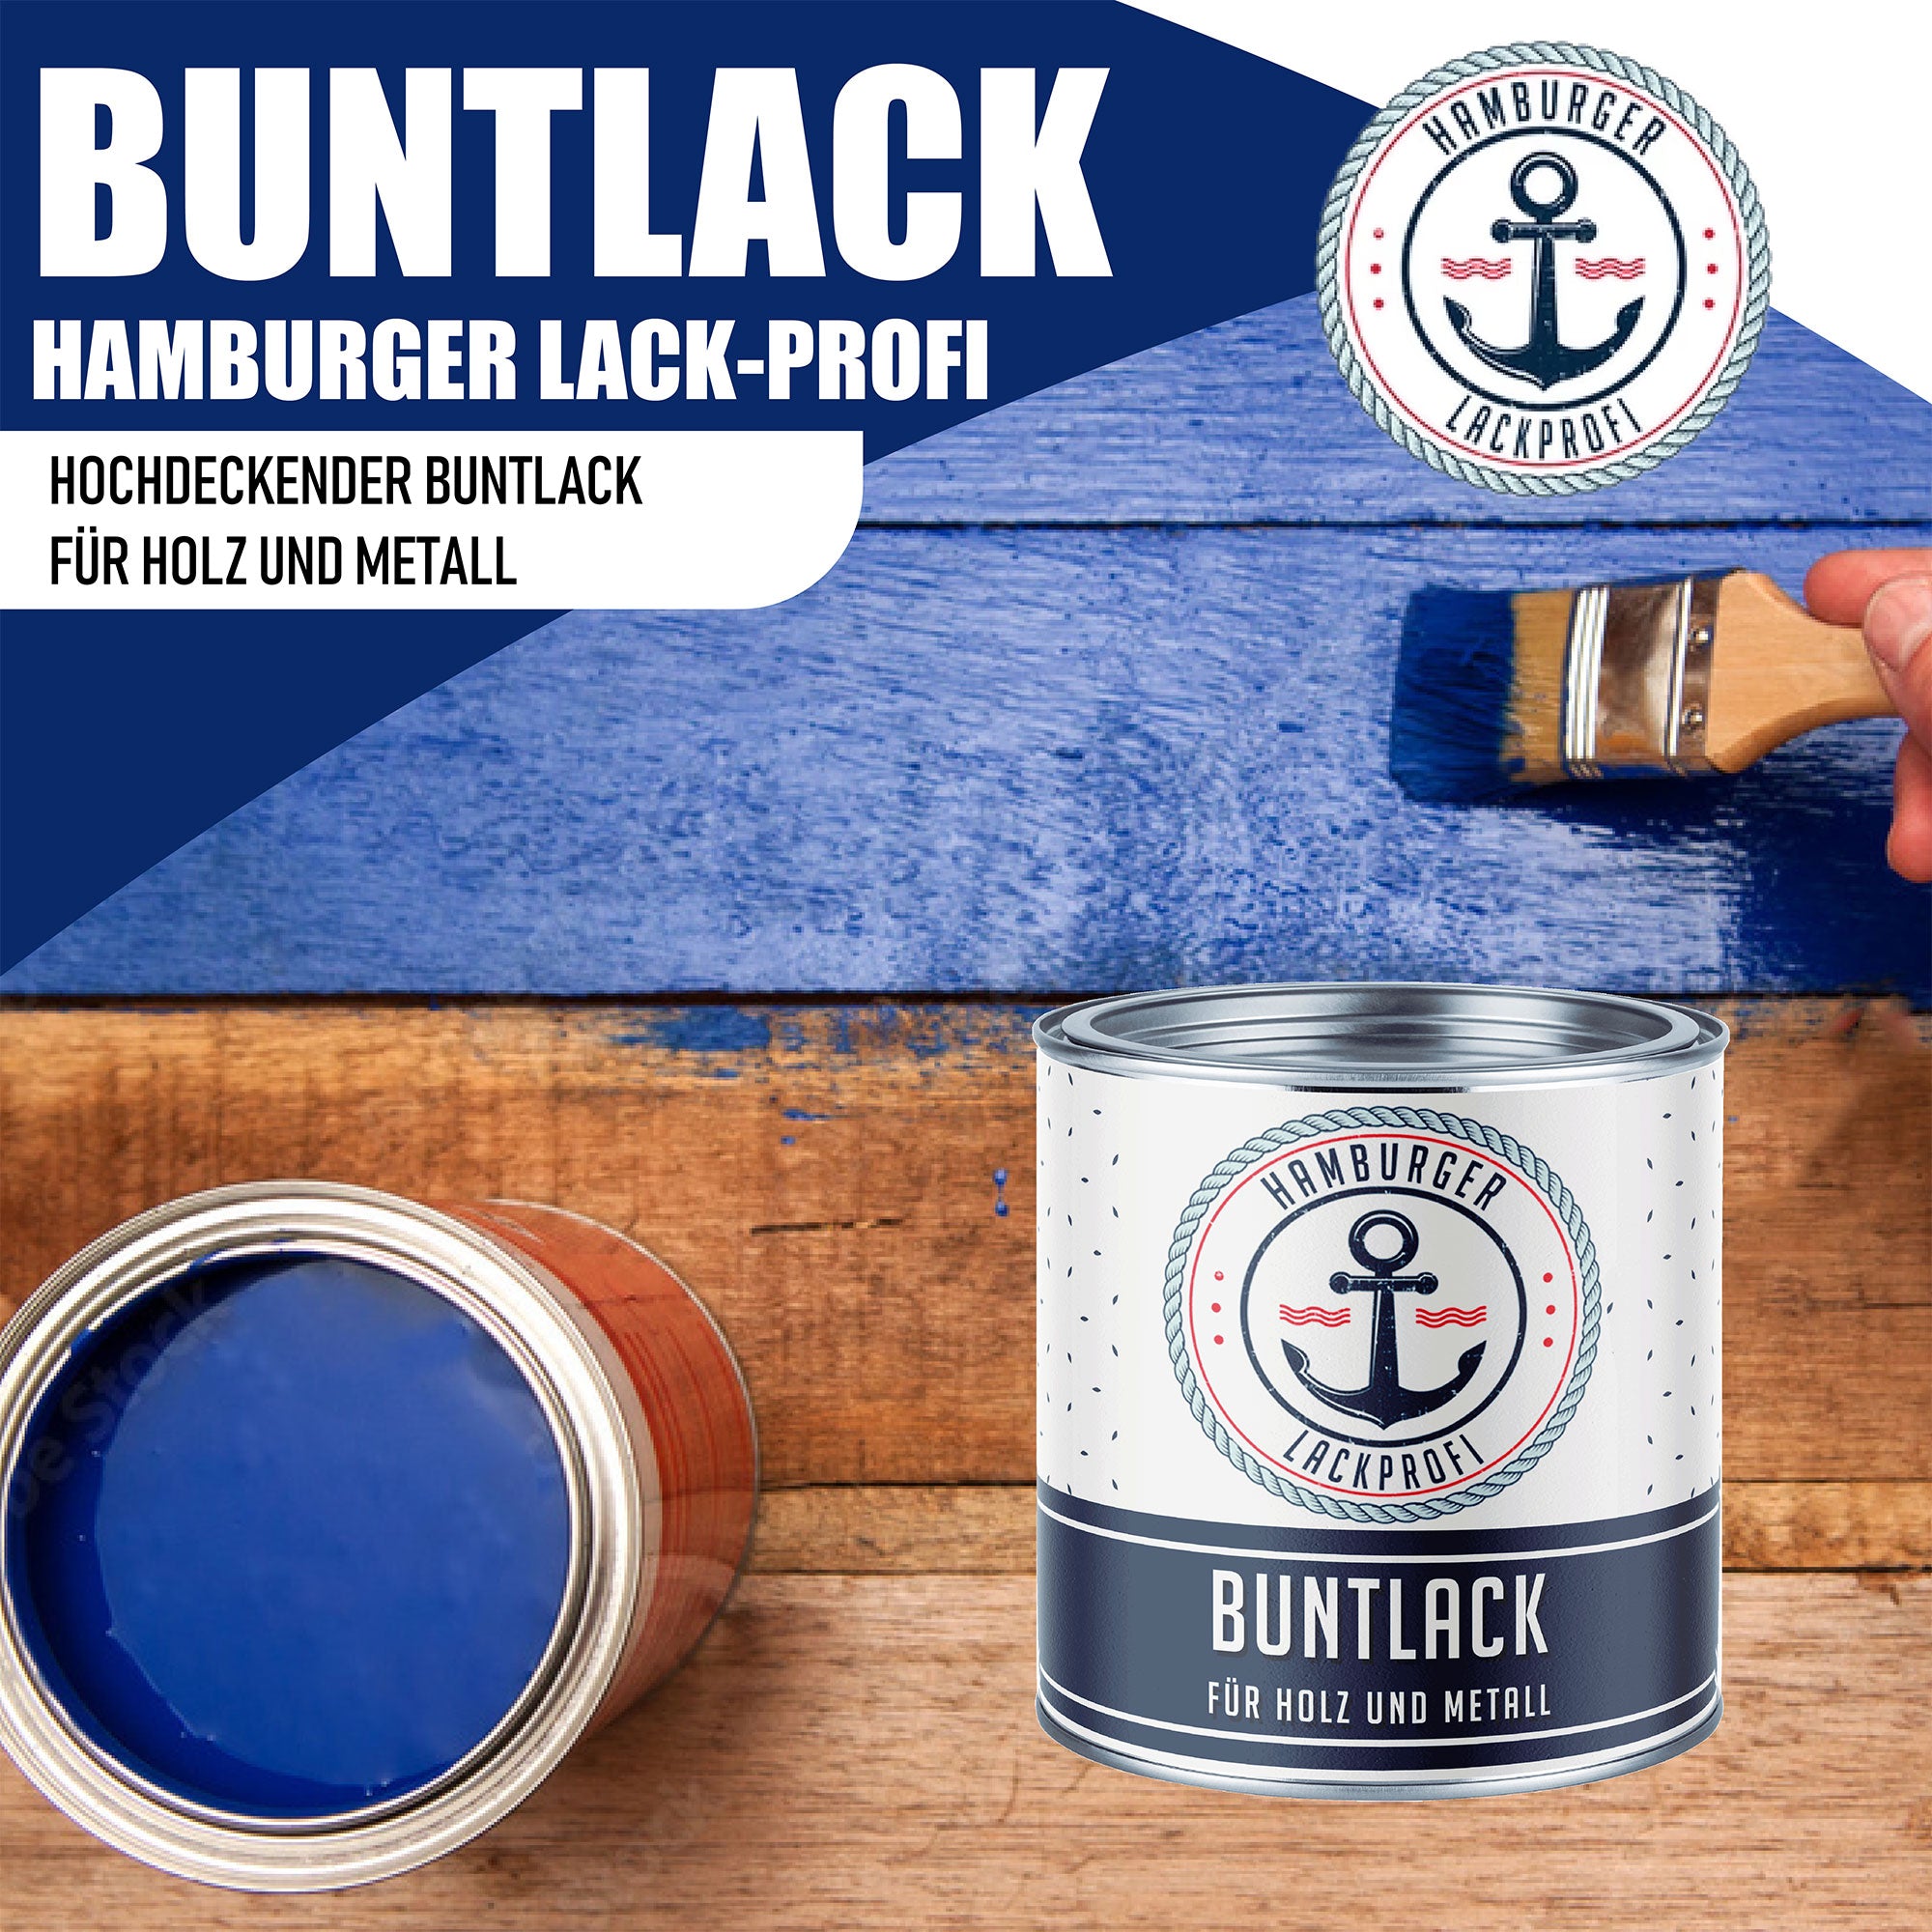 Hamburger Lack-Profi Buntlack Ockerbraun RAL 8001 - Robuster Kunstharzlack